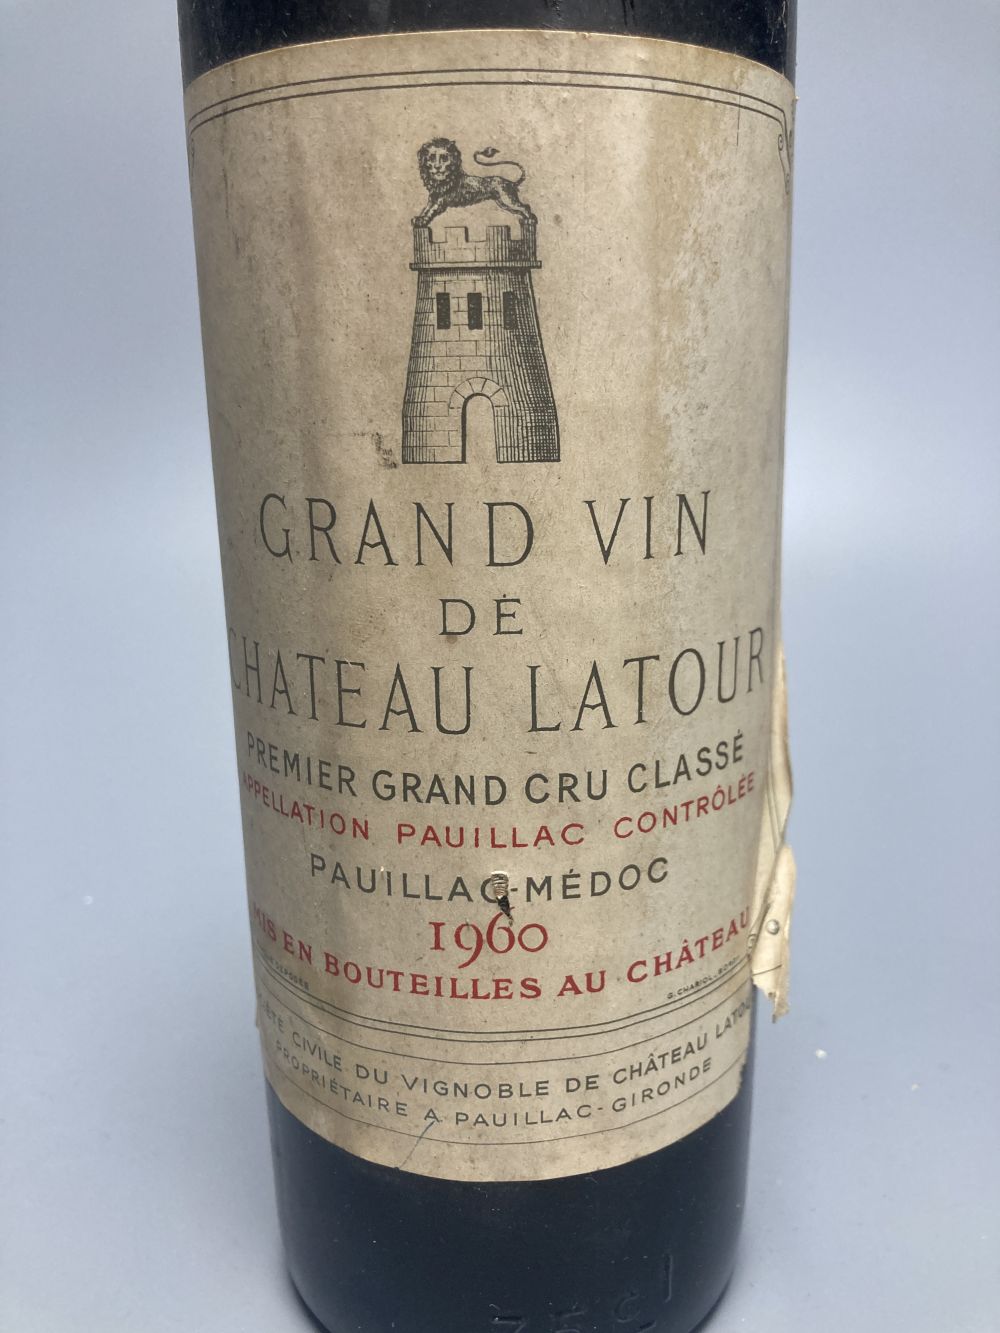 One bottle of Chateau Latour 1960